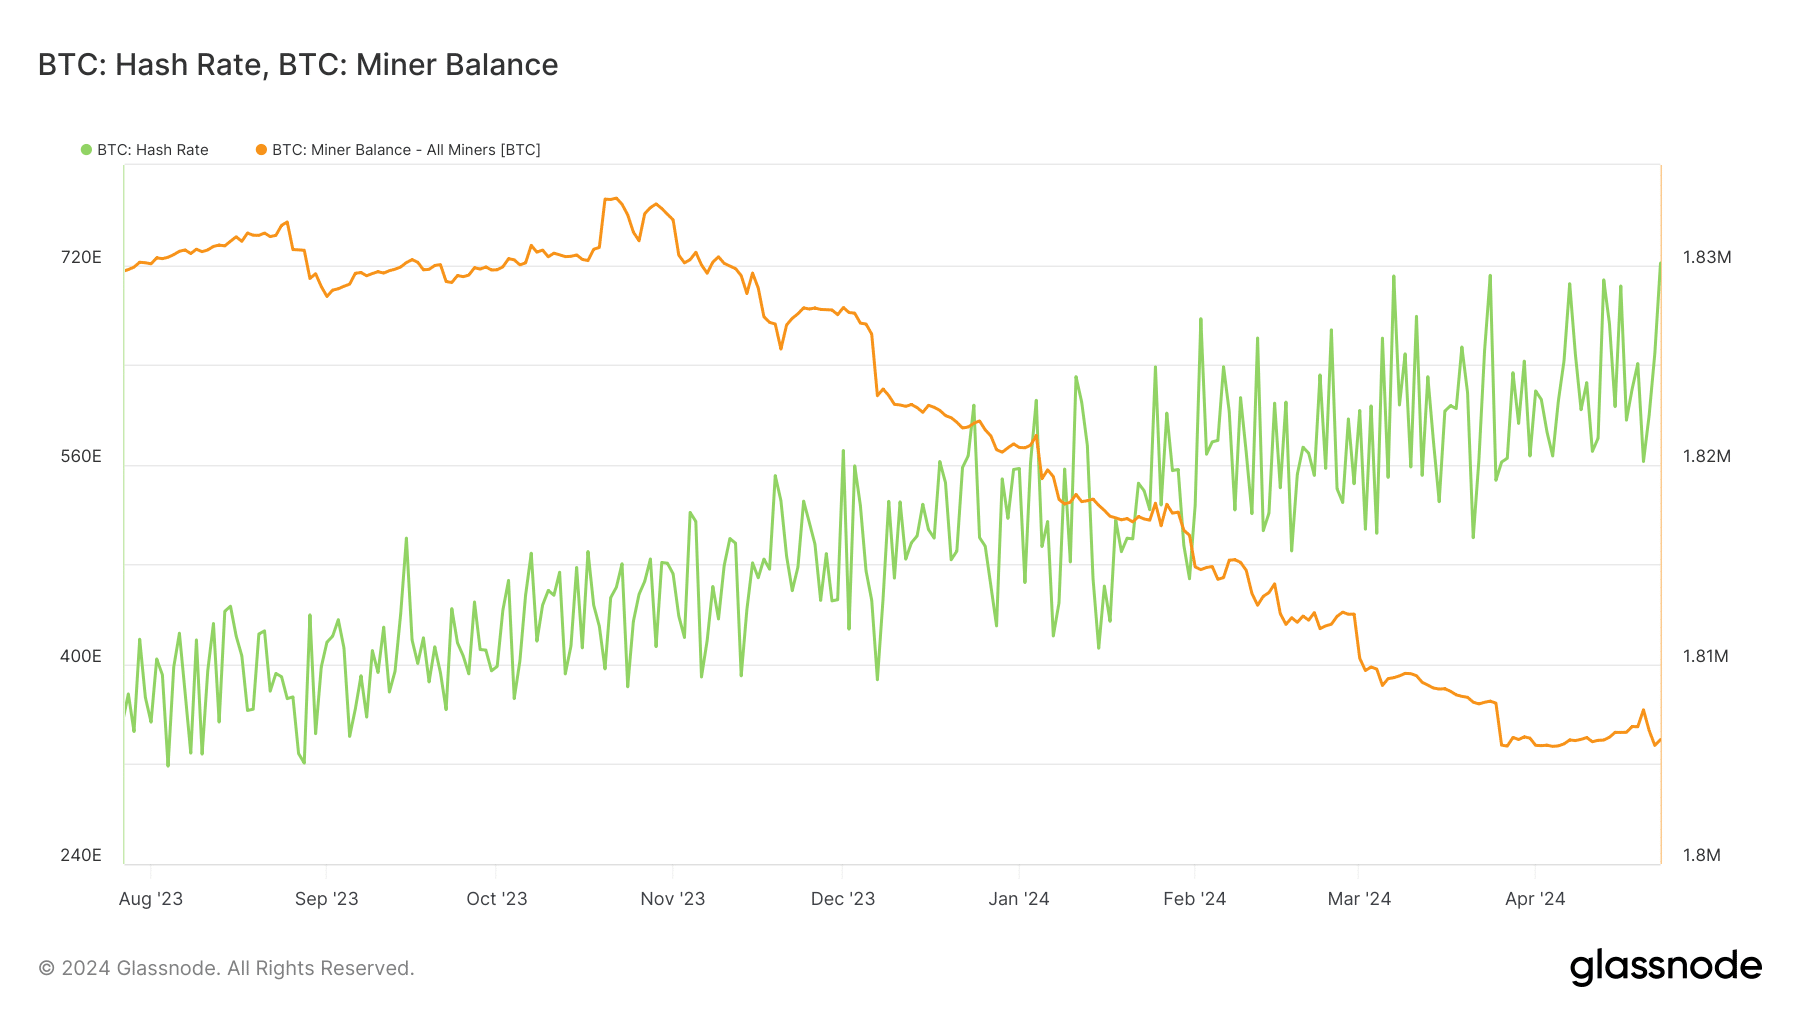 Bitcoin hash rate